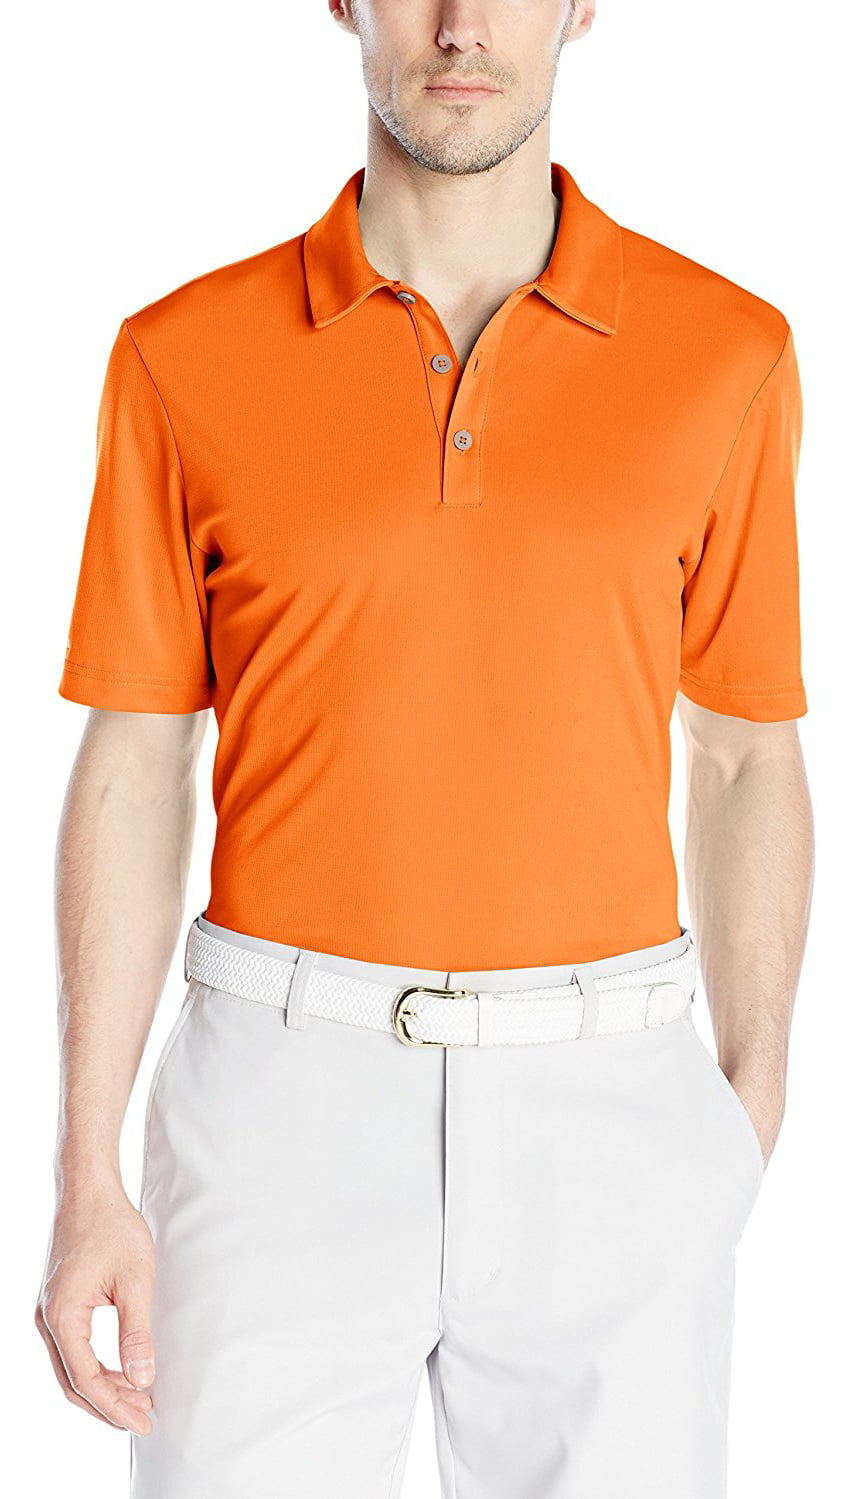 ClimaLite 3-stripes Cuffed Polo Shirt - Walmart.com